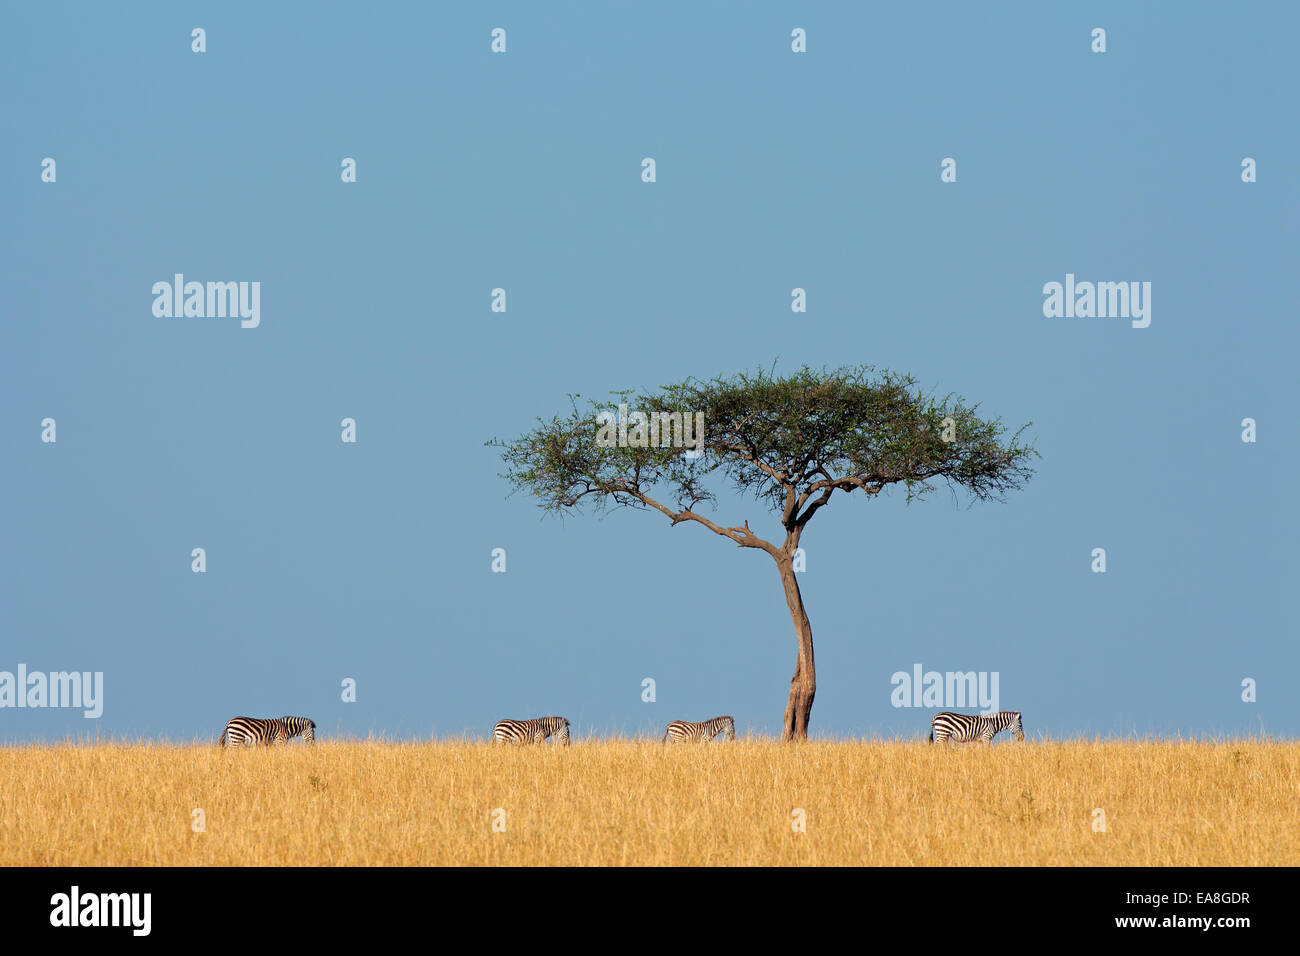 Plains zebras (Equus burchelli) and tree, Masai Mara National Reserve, Kenya Stock Photo